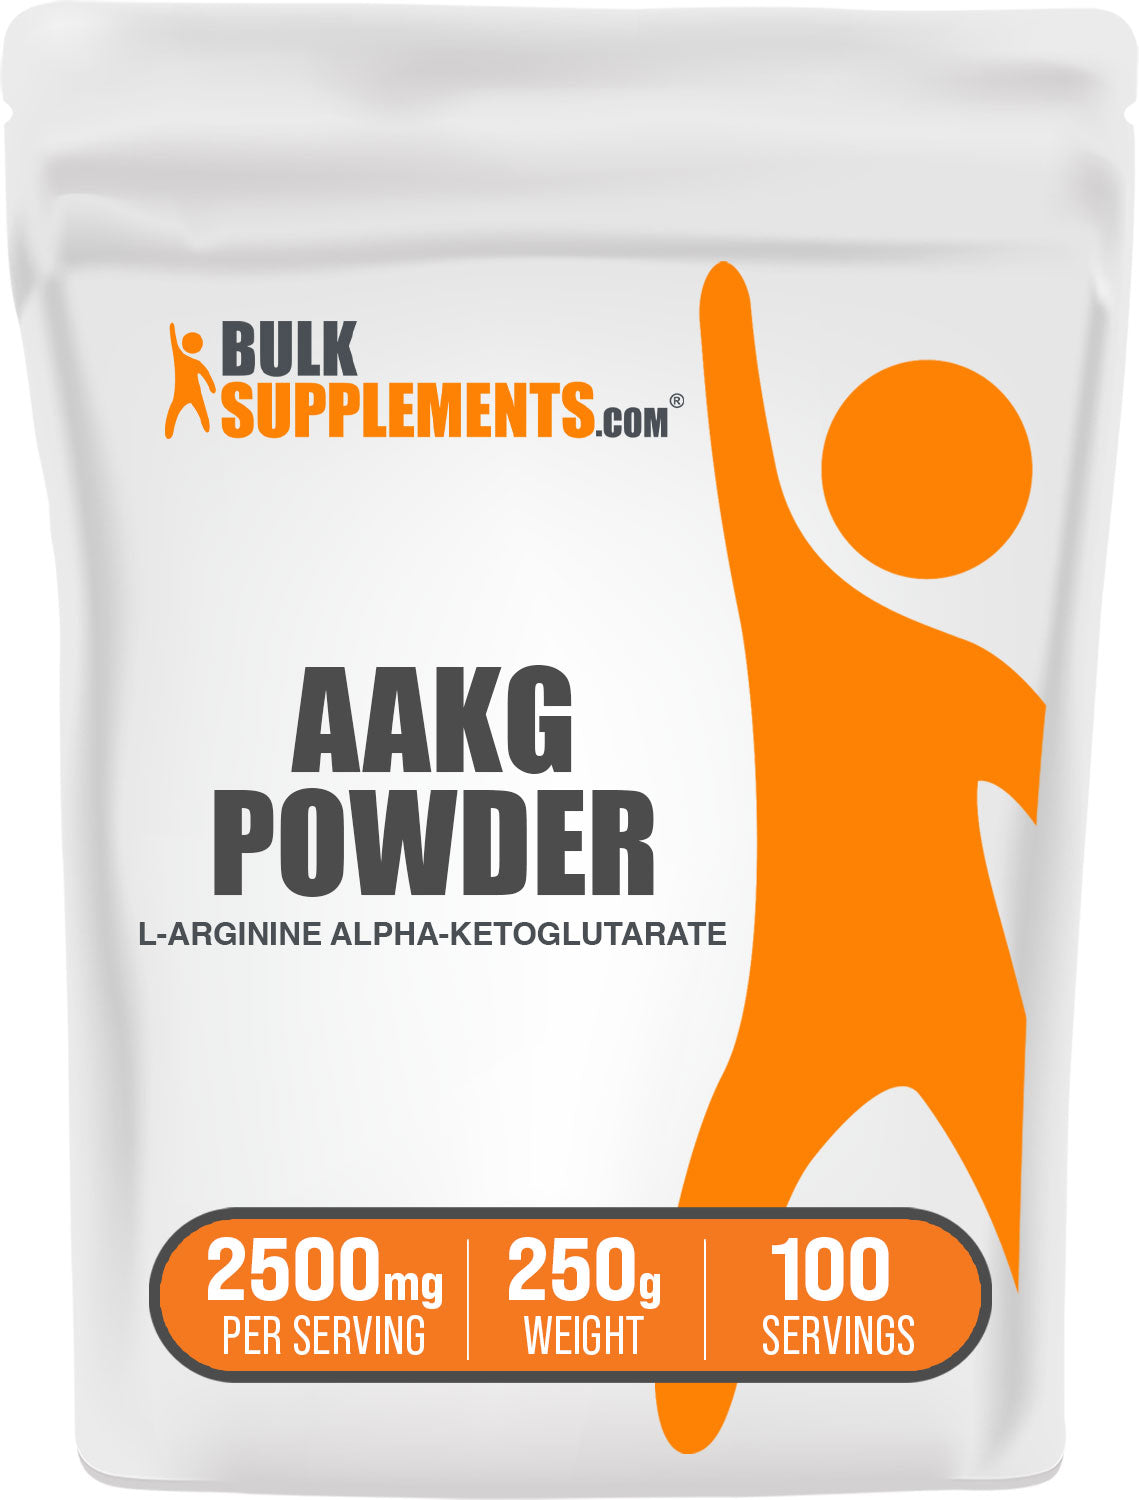 AAKG powder 250g bag